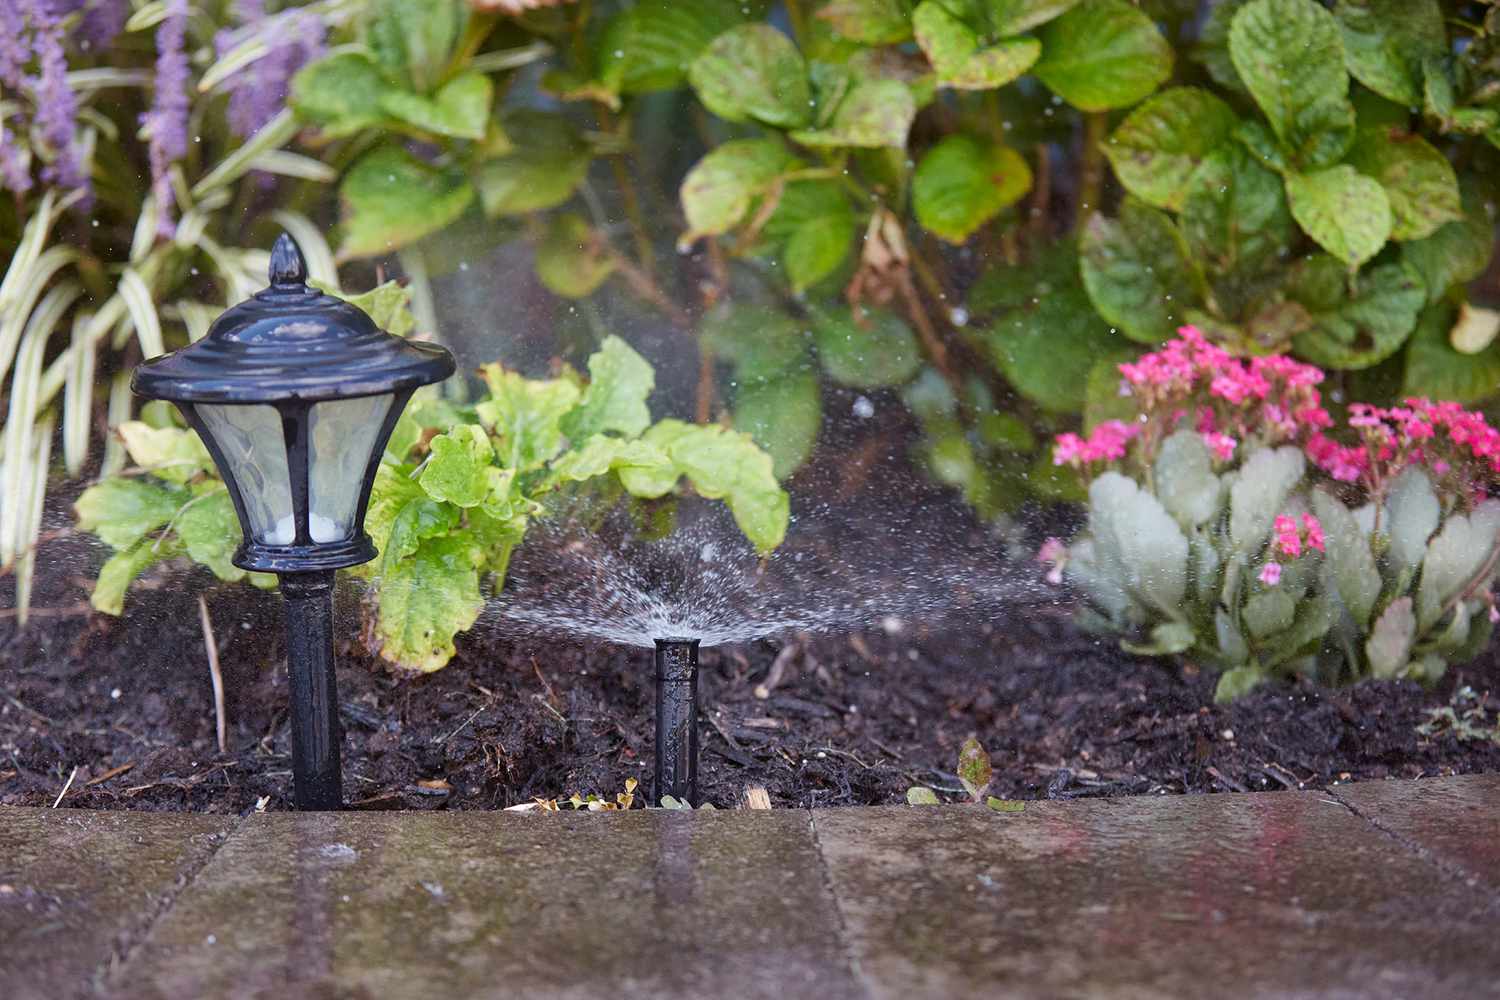 Lawn irrigation sprinkler spraying water across various lawn plants, pathway lamp and sidewalk